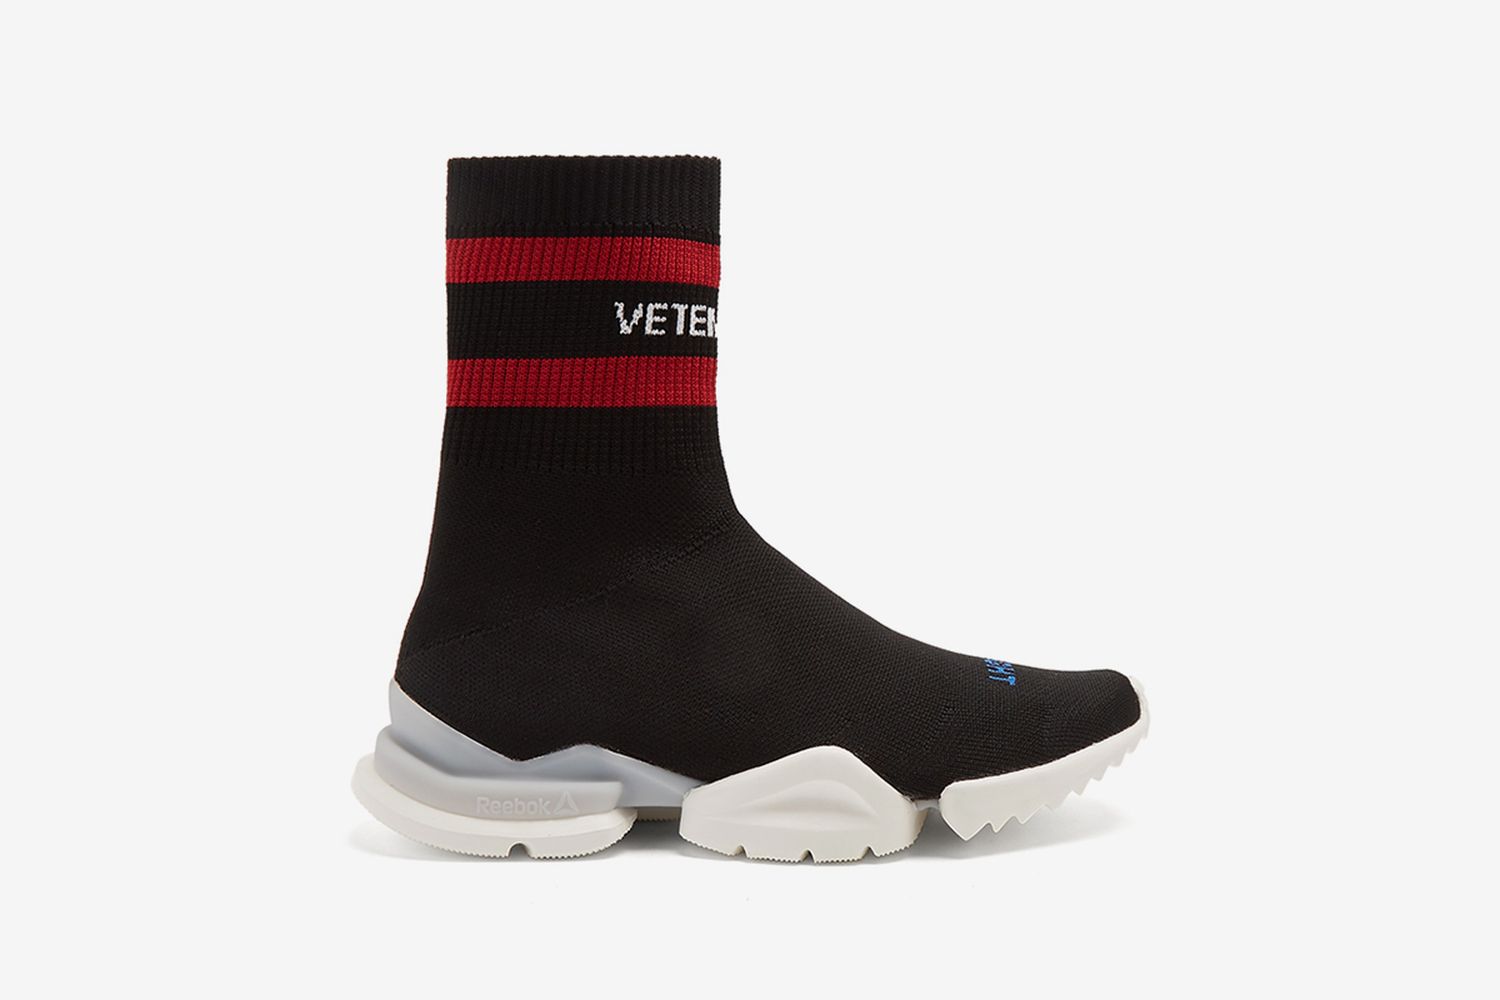 VETEMENTS x Reebok Sock Sneakers: Here's Where to Buy Them Online